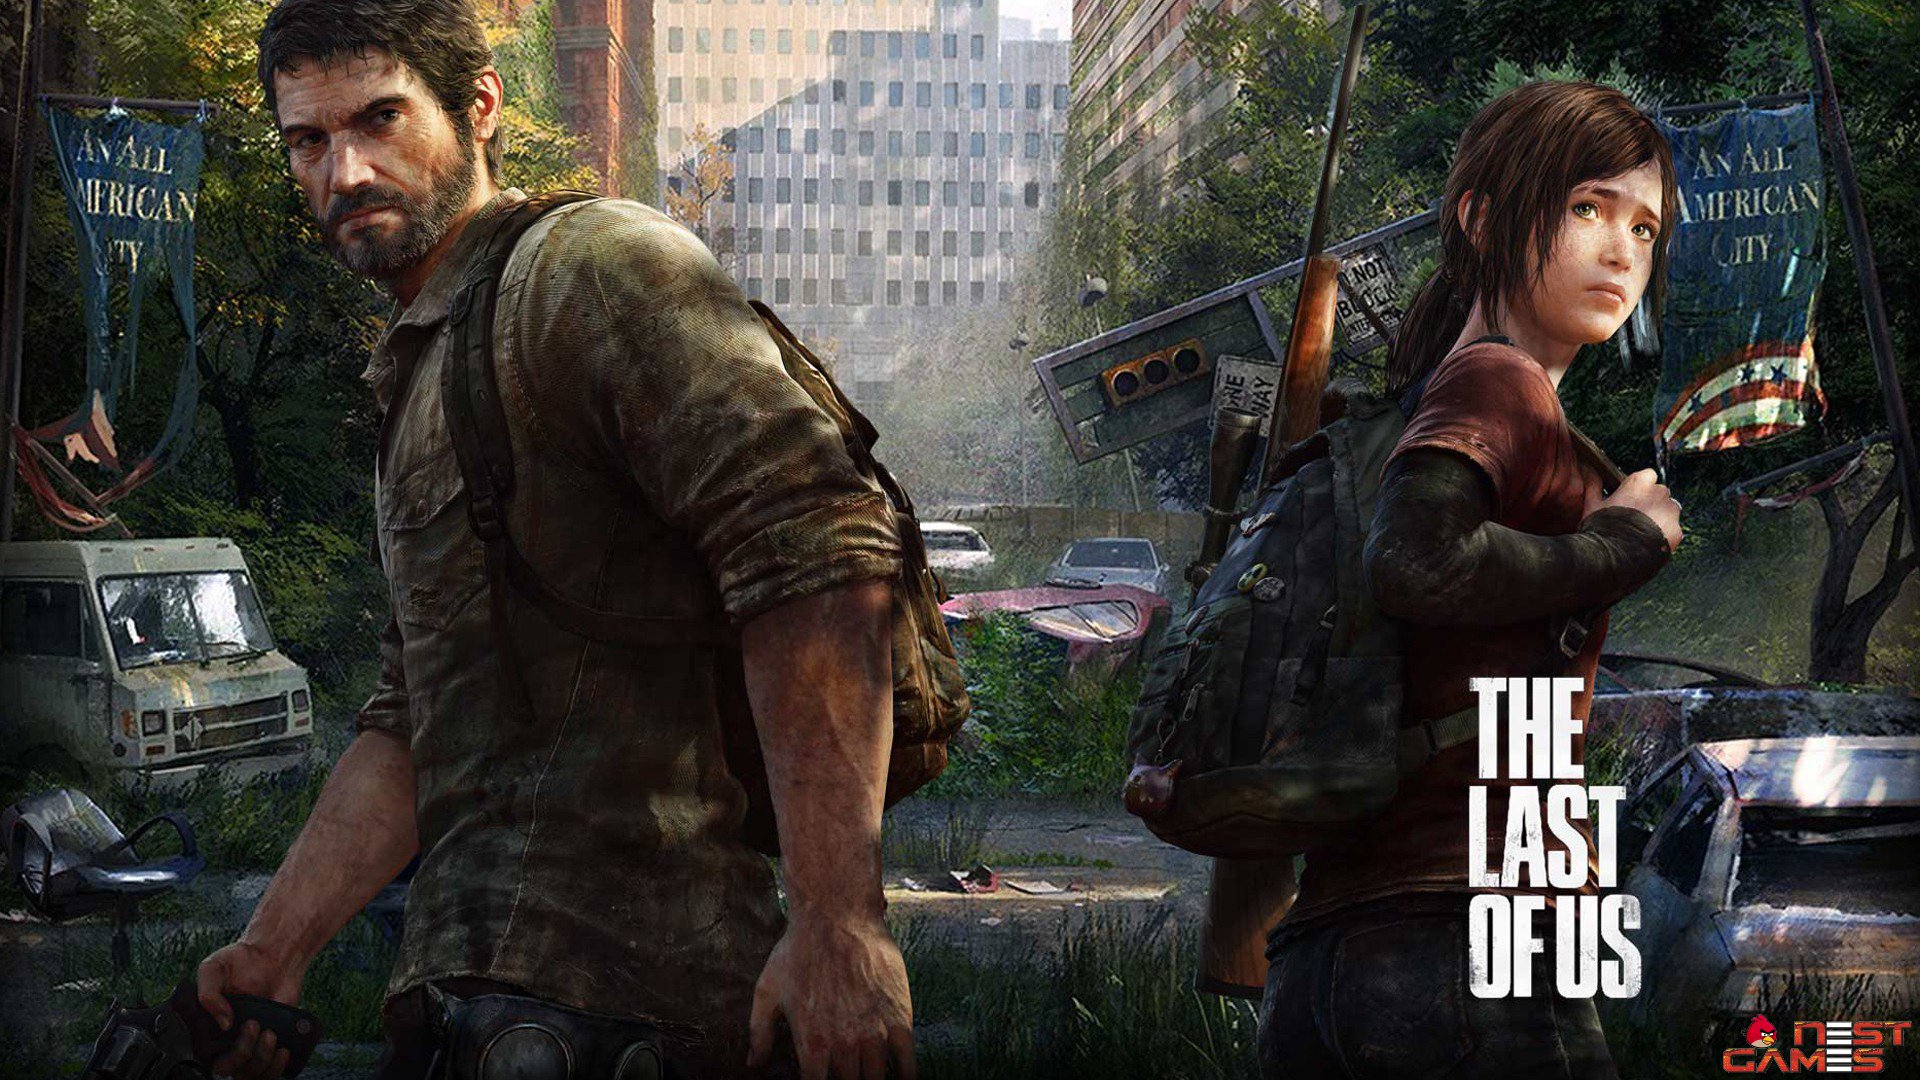 Demo версия The Last of Us купившим новый God of War